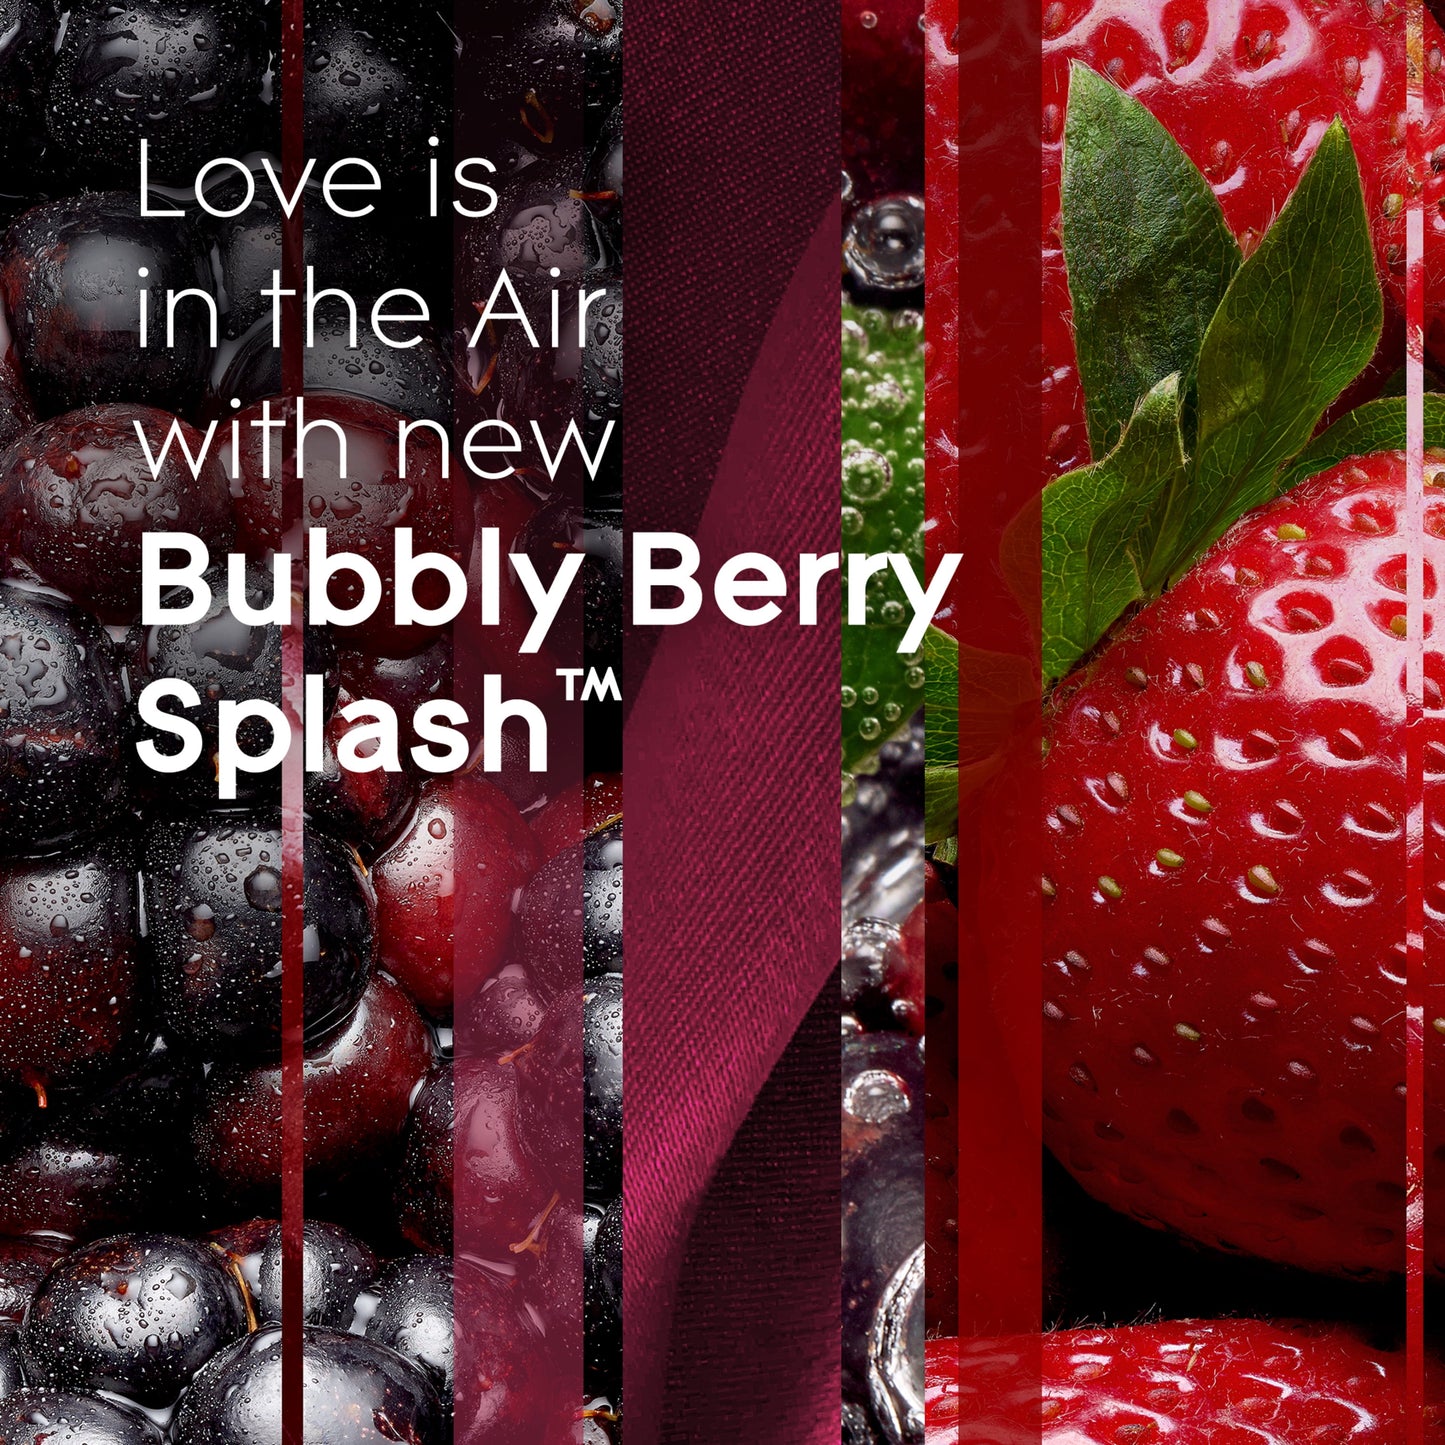 Glade Automatic Spray Refill, Air Freshener, Bubbly Berry Splash, 6.2 oz